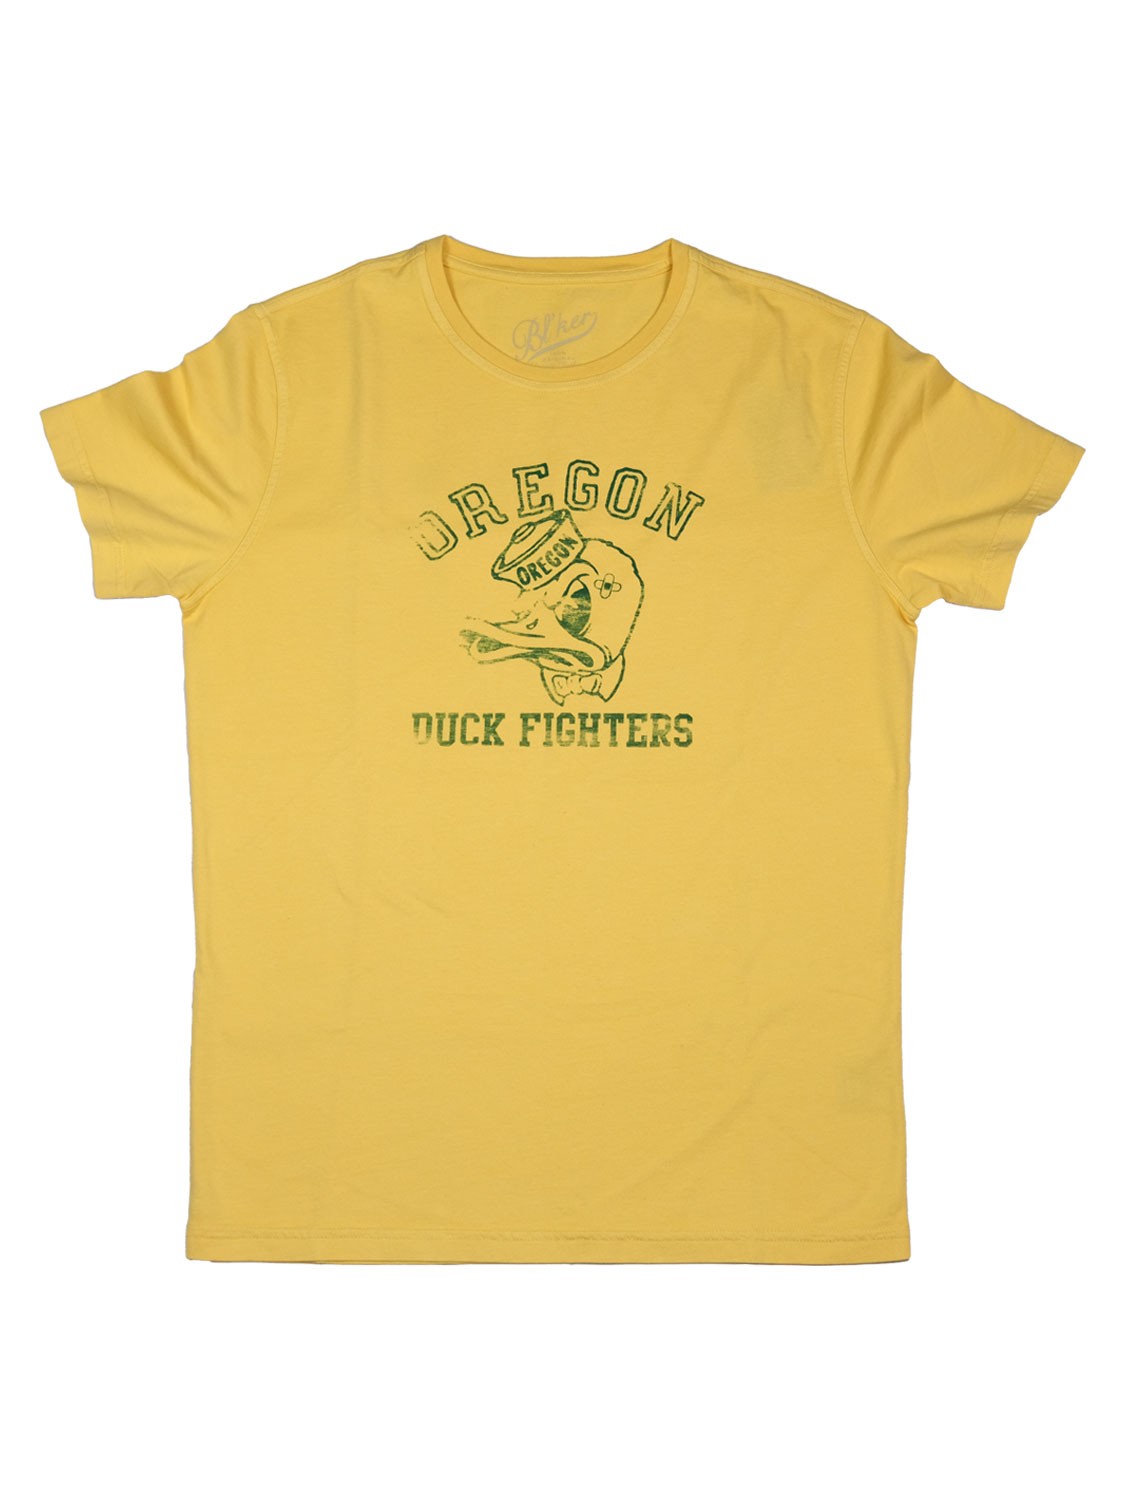 Bl'ker T-shirt Uomo Graphic Oregon Duck Fighter